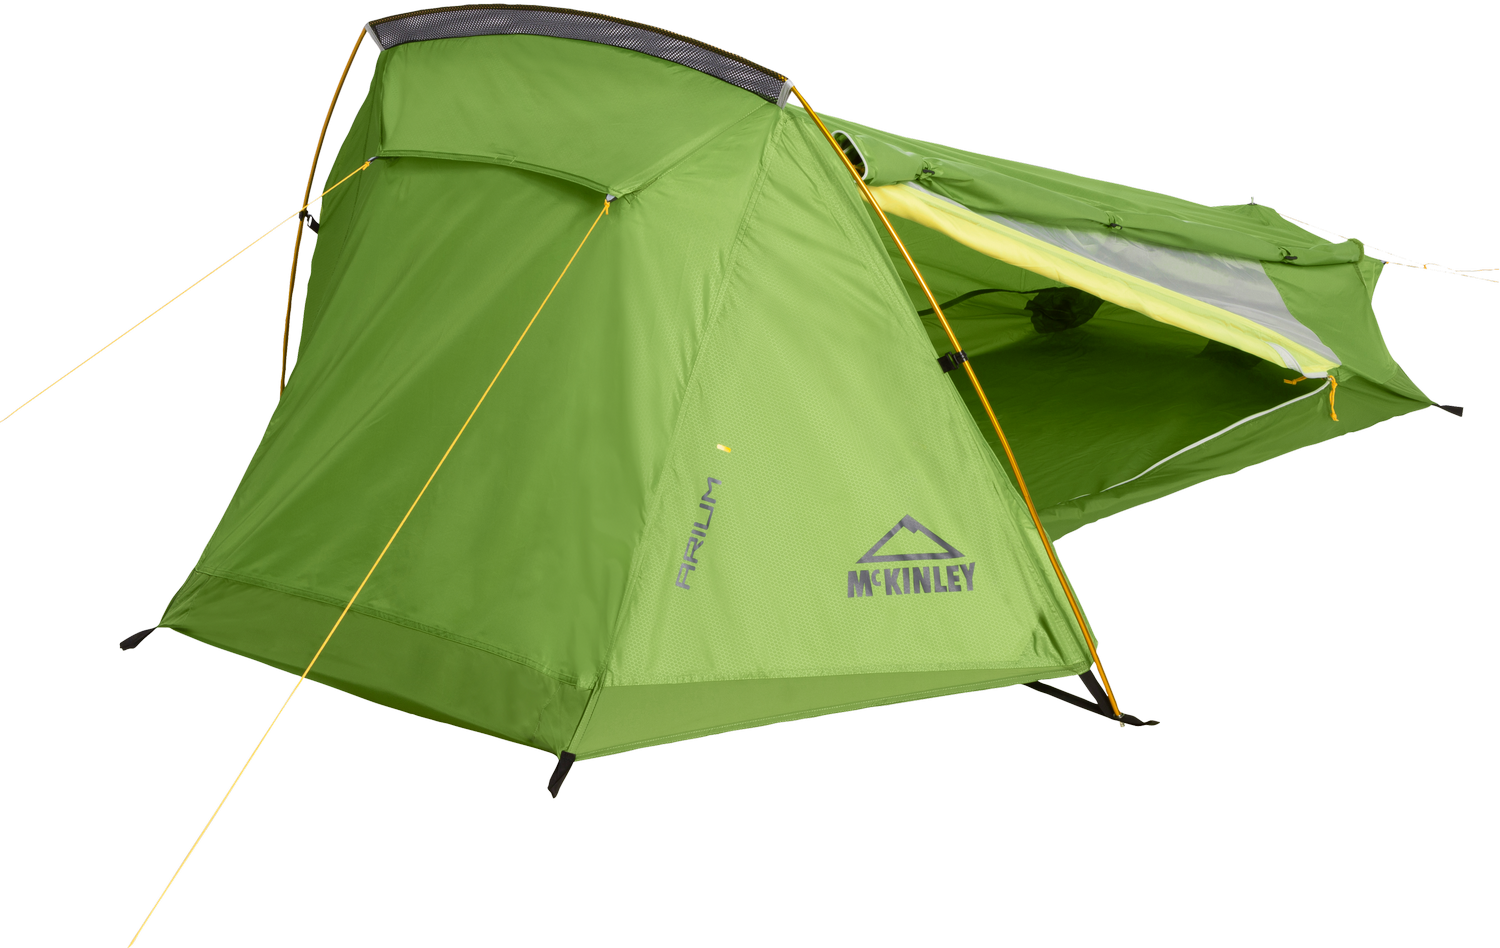 Green Tent